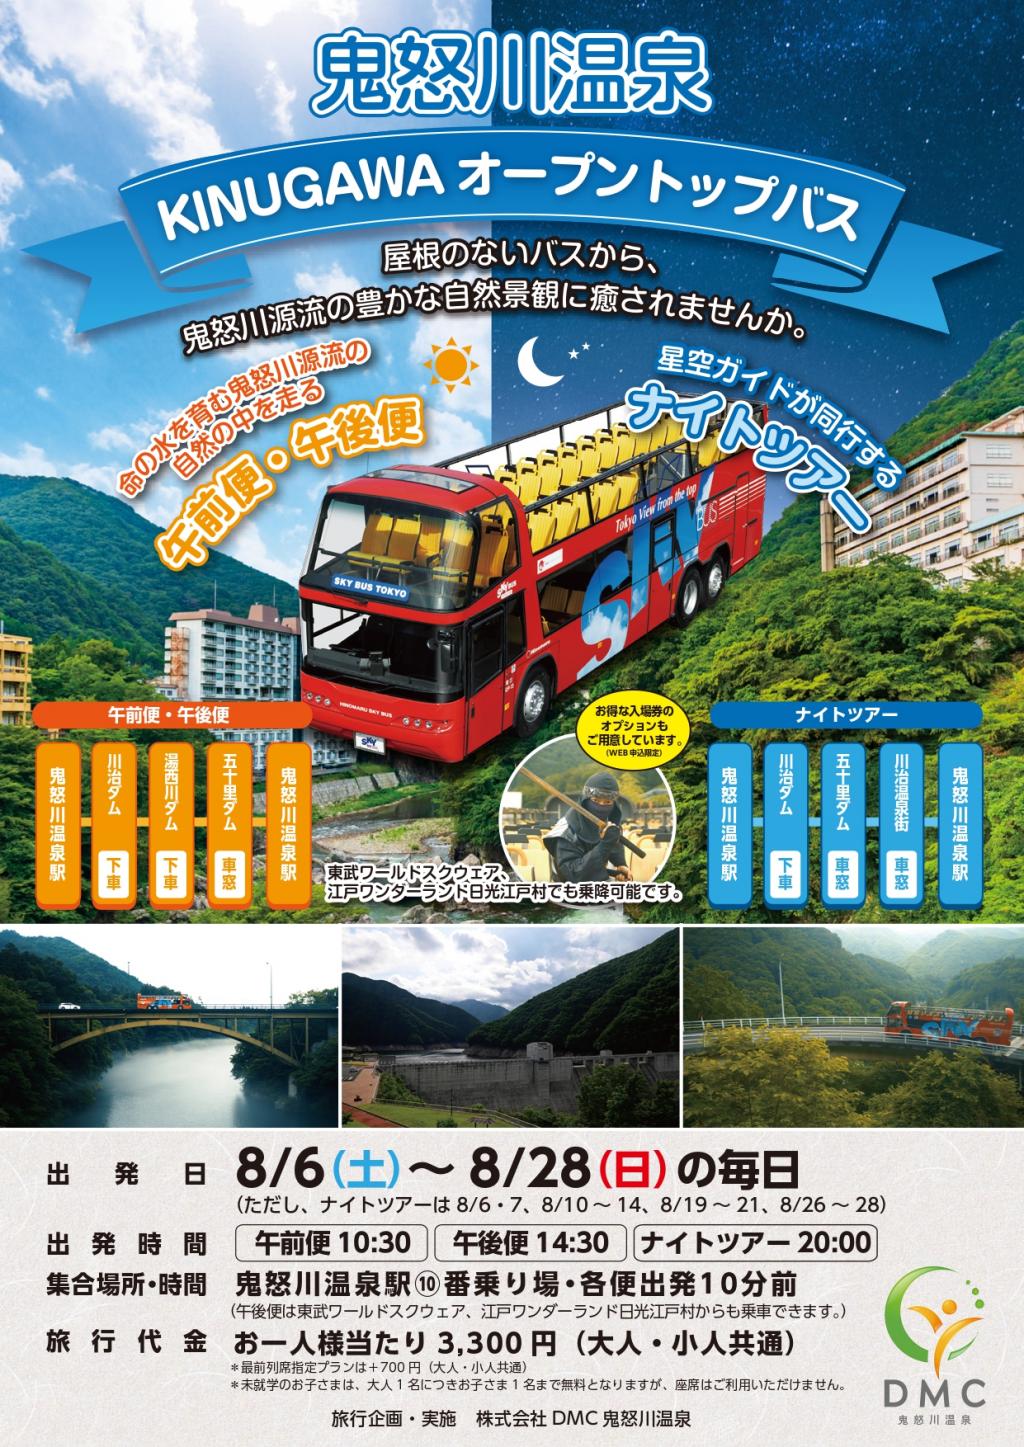 Kinugawaオープントップバス運行のお知らせ 最新情報 日光交通株式会社